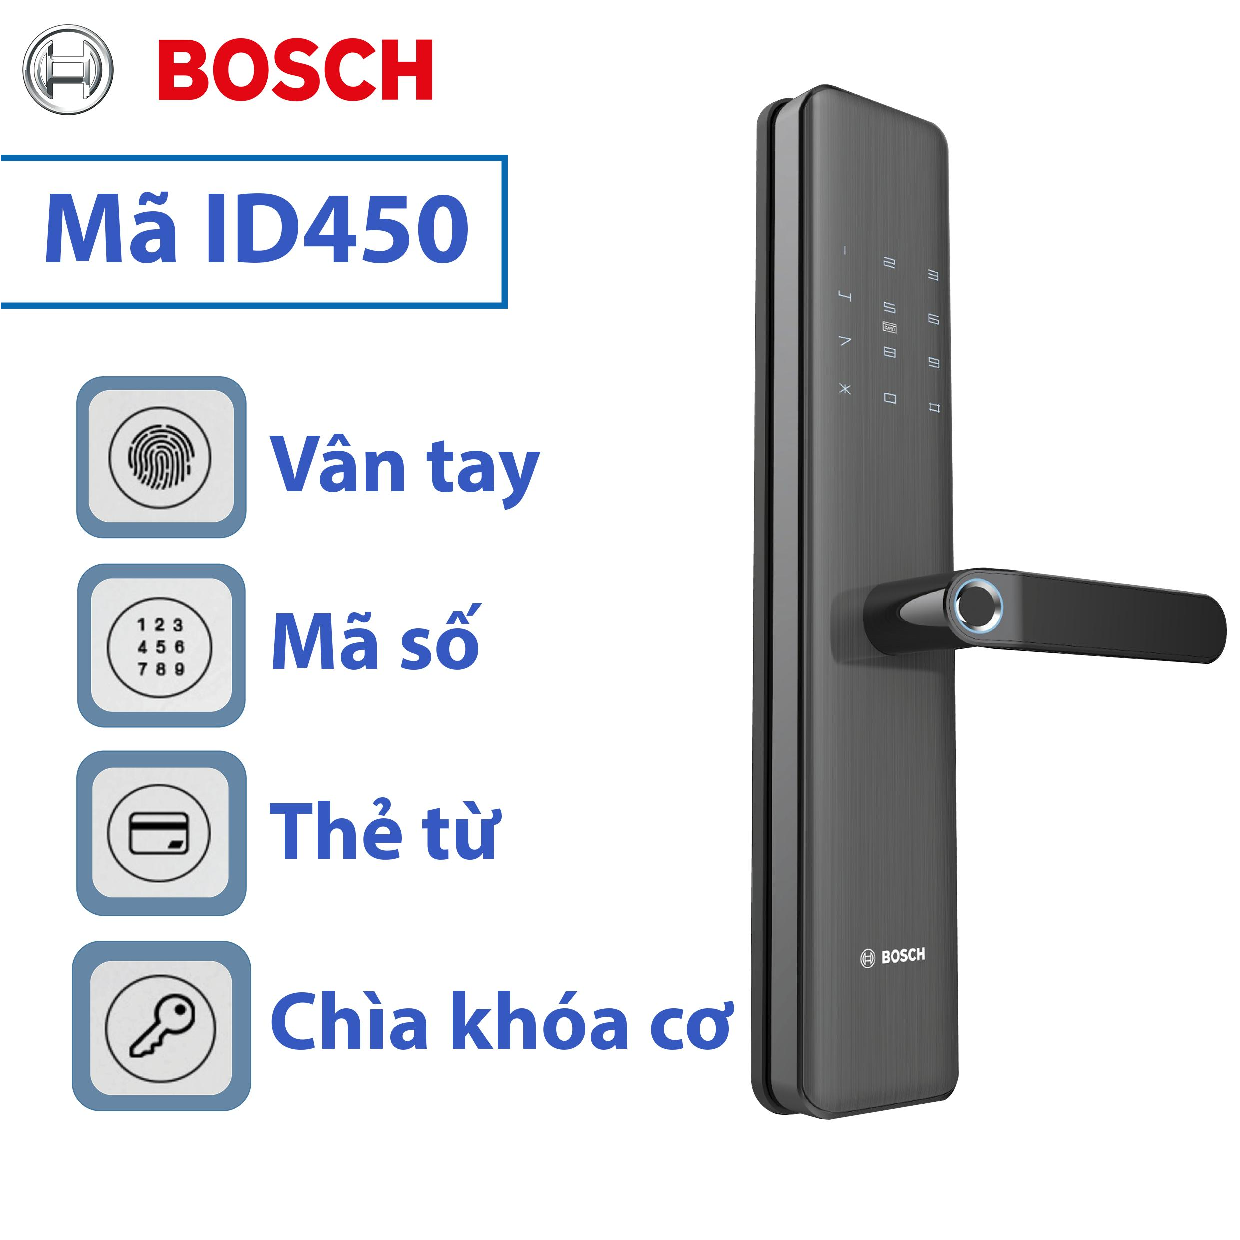  BOSCH ID450